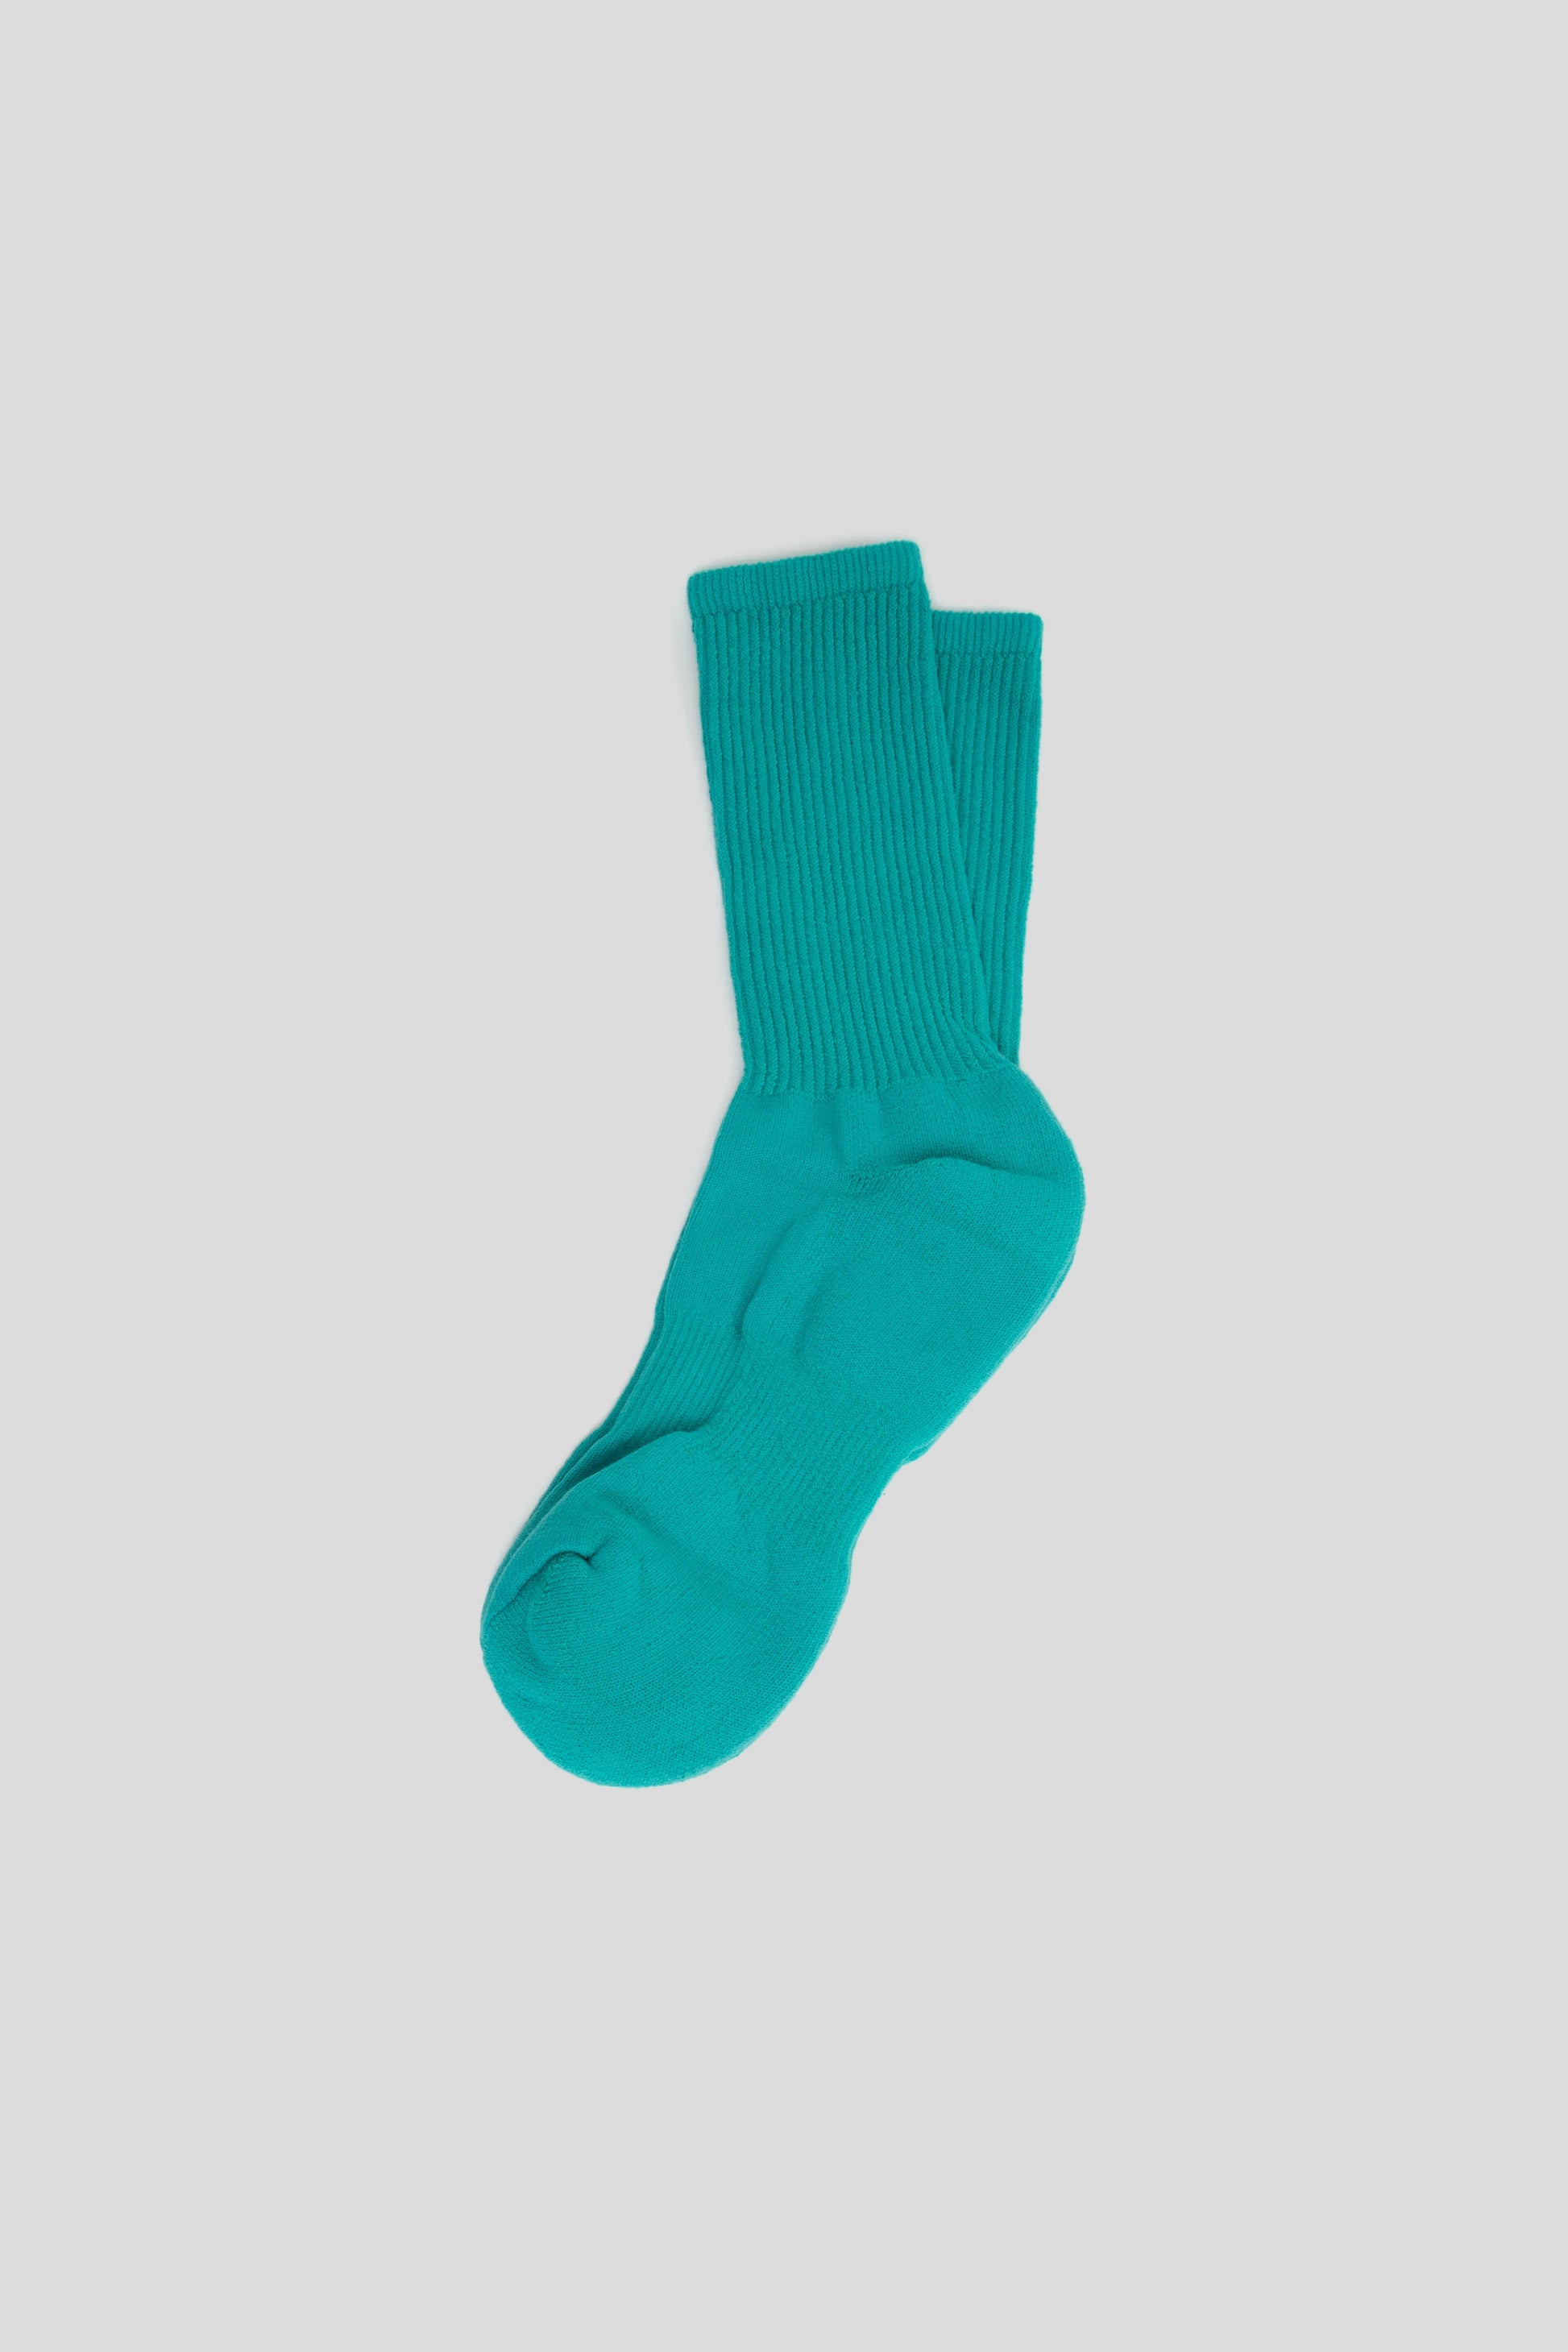 American Trench Mil-Spec Sport Socks in Emerald Green